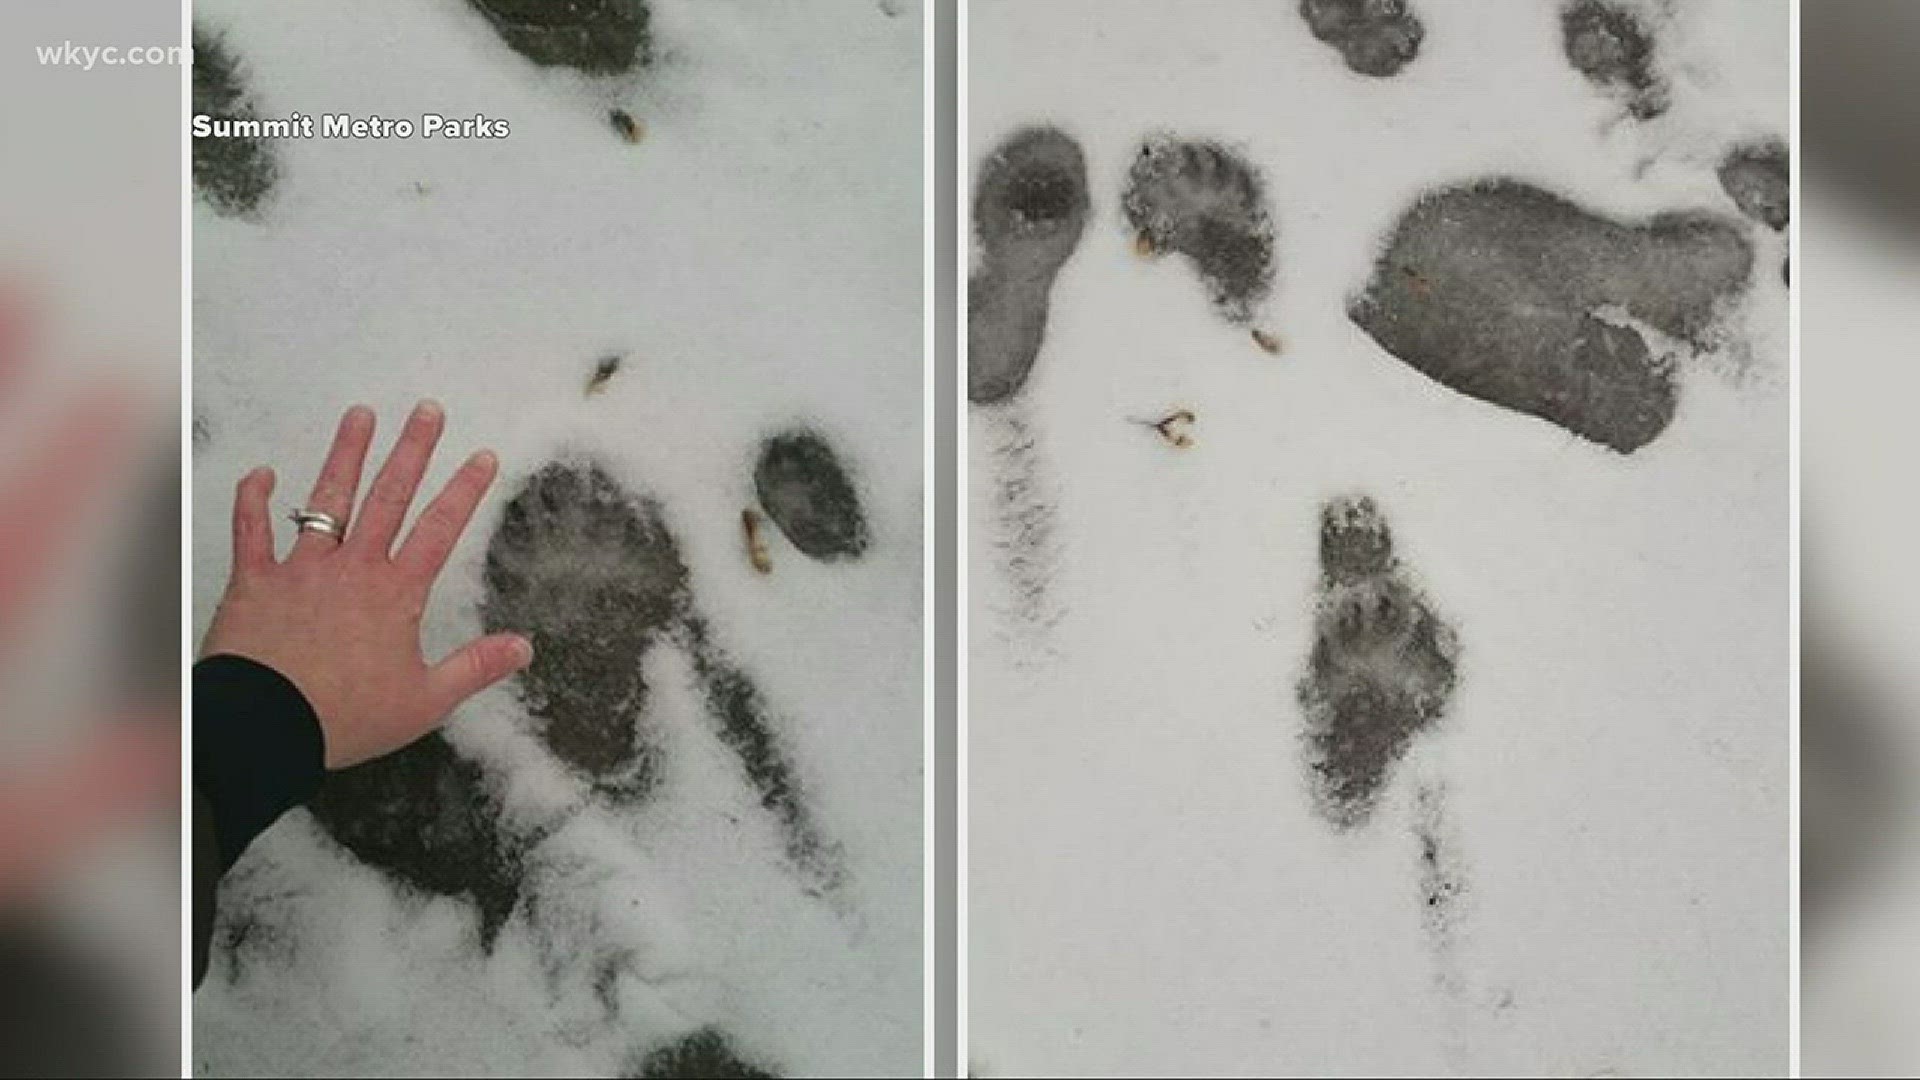 Summit Metro Parks confirms black bear paw print sighting